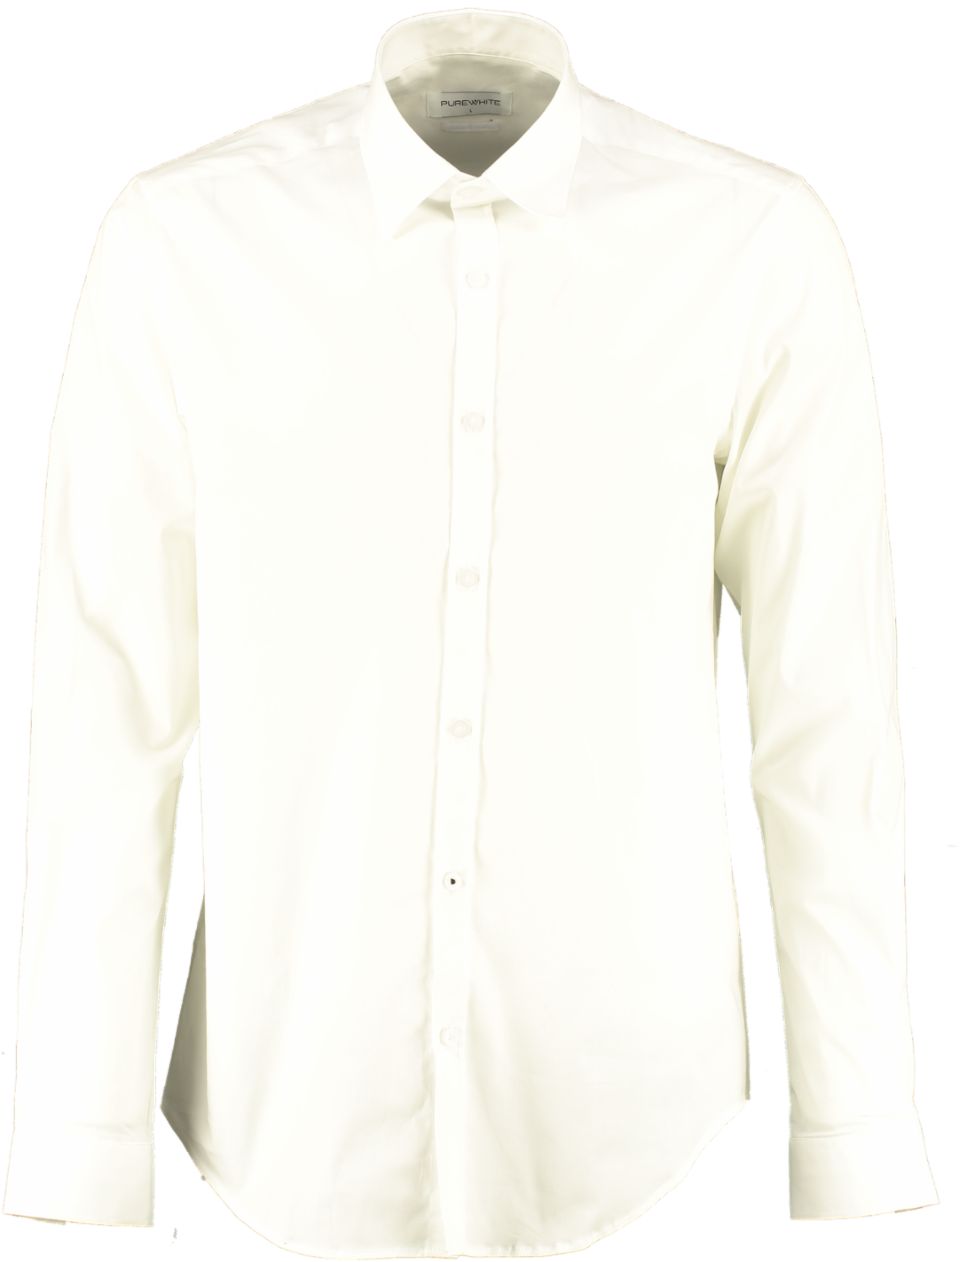 Purewhite Casual Shirt